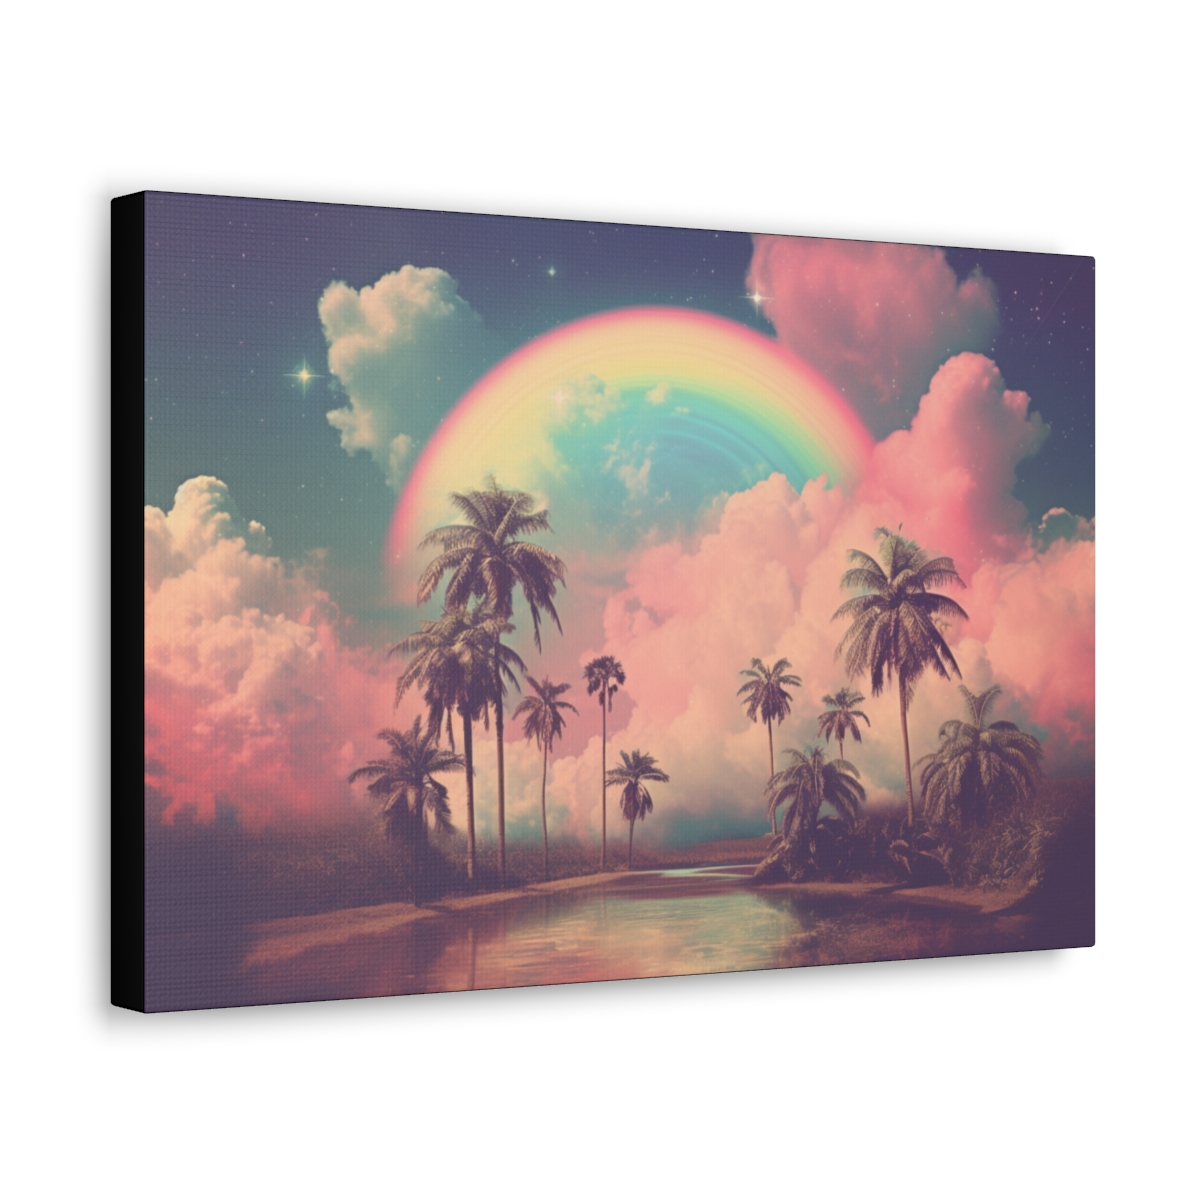 Rainbow Ethereal Art Canvas Print: Astral Ripples